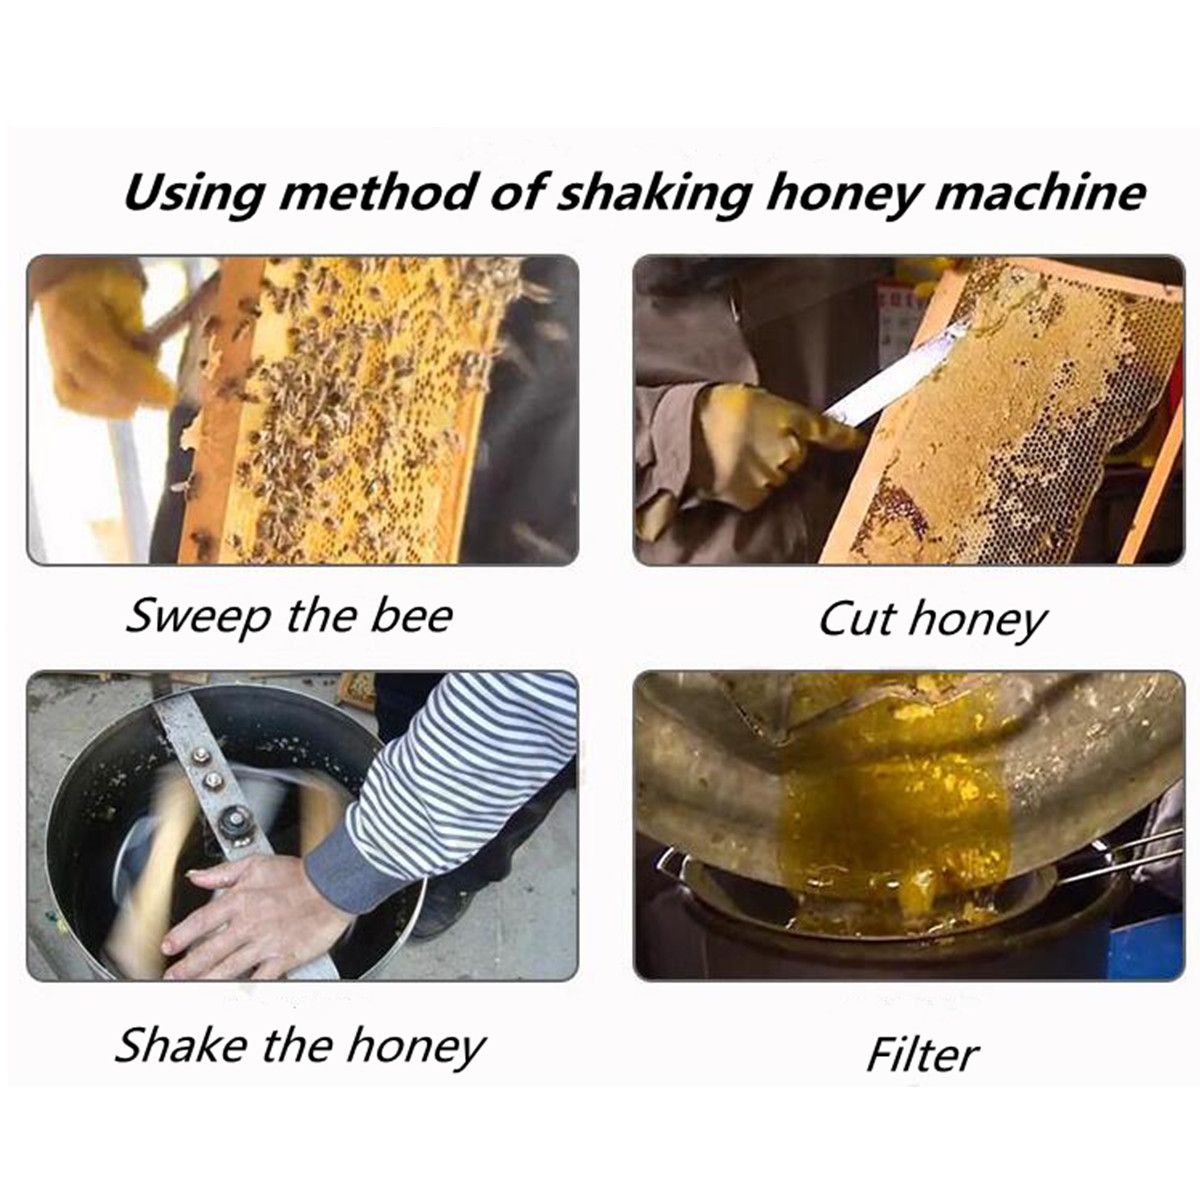 10mm-Stainless-Steel-Bee-Honey-Extractor-Beehive-Drum-Tank-Beekeeping-Equipment-Two-Frame-1375336